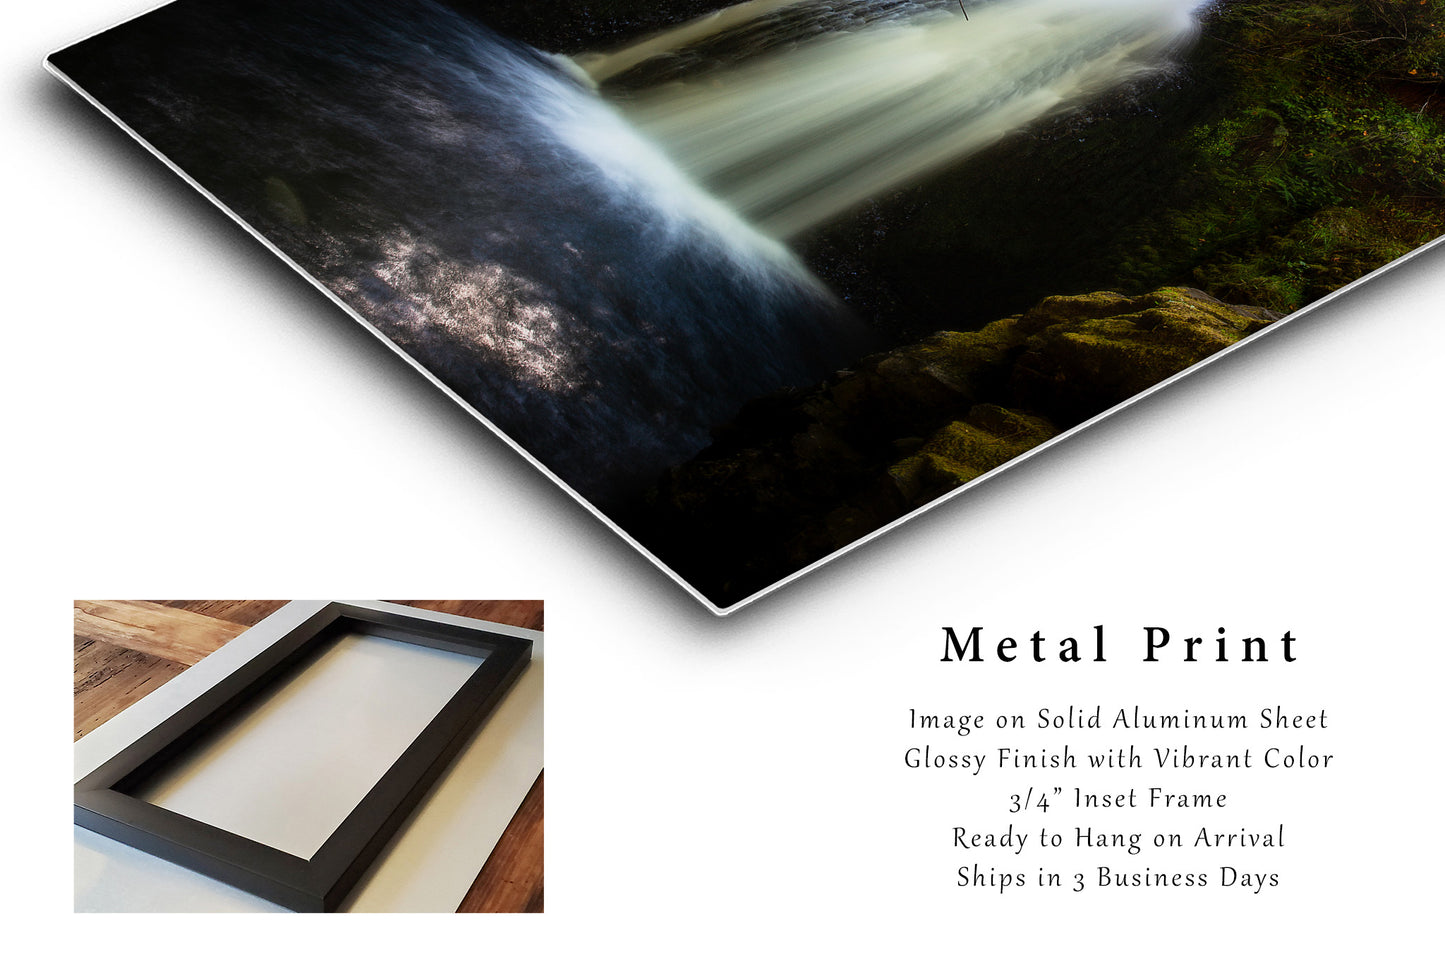 Bridal Veil Falls Metal Print | Vertical Waterfall Photography | Pacific Northwest Wall Art | Oregon Photo | Nature Decor | Ready to Hang